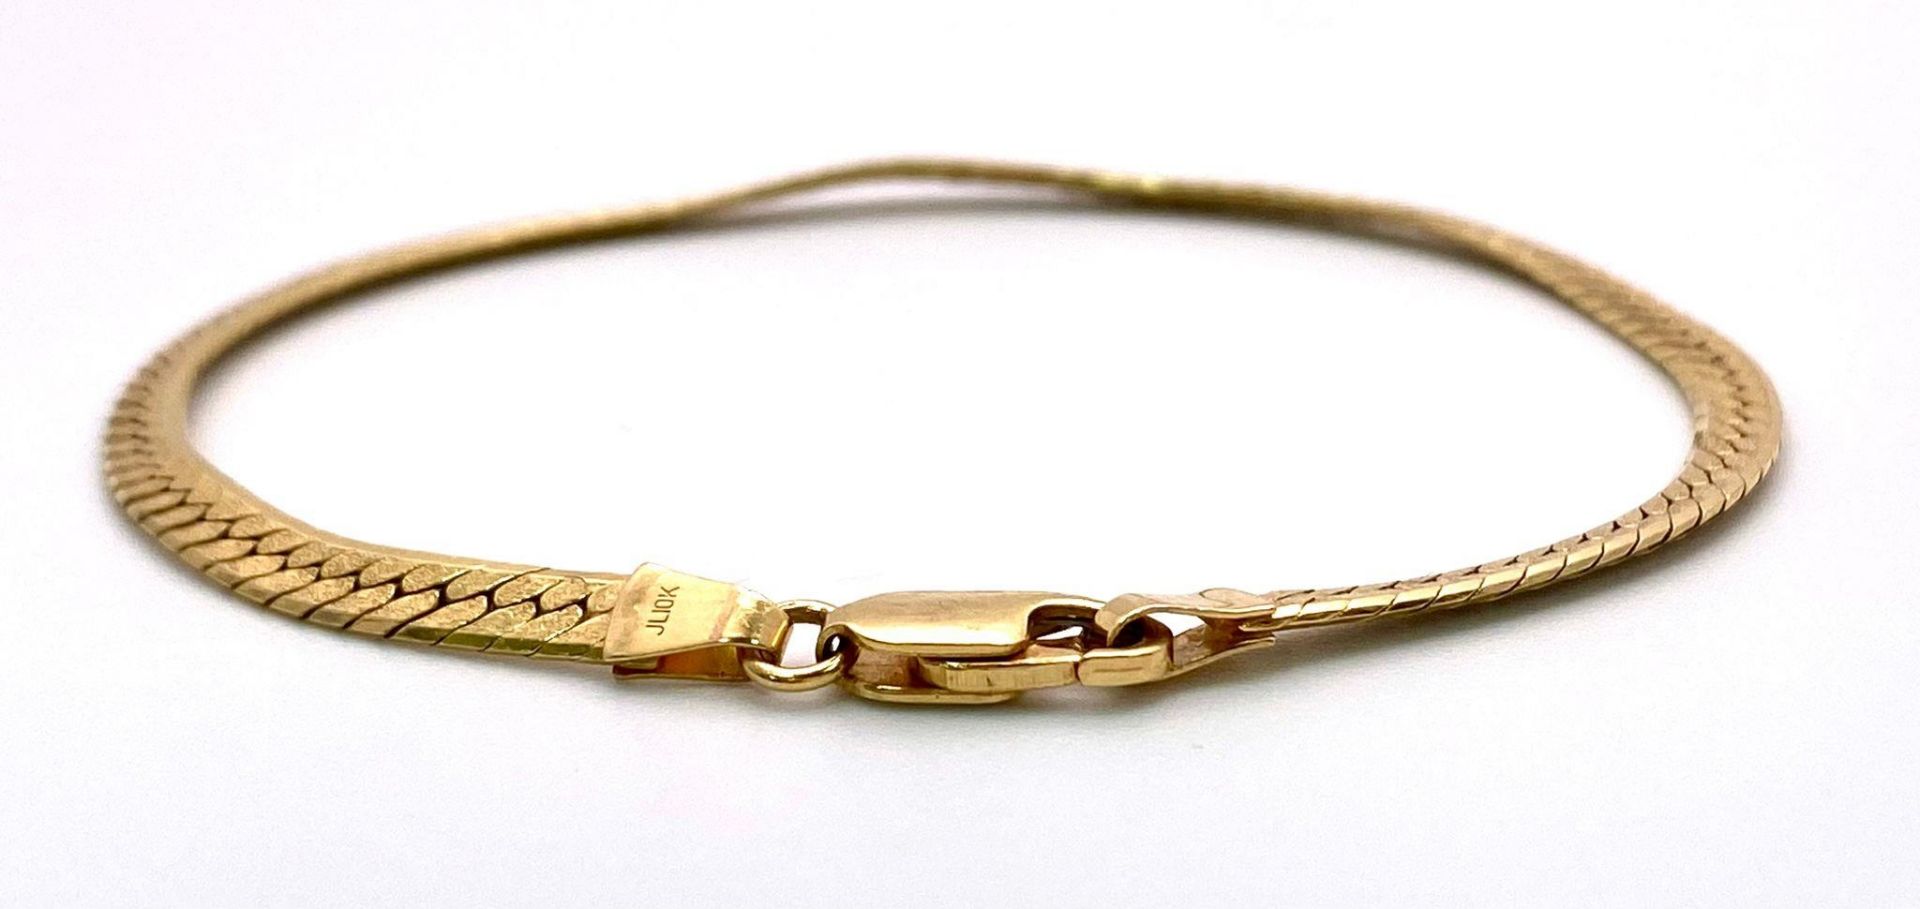 A 10k Yellow Gold Herringbone Bracelet. 17cm. 5g weight. - Image 2 of 4